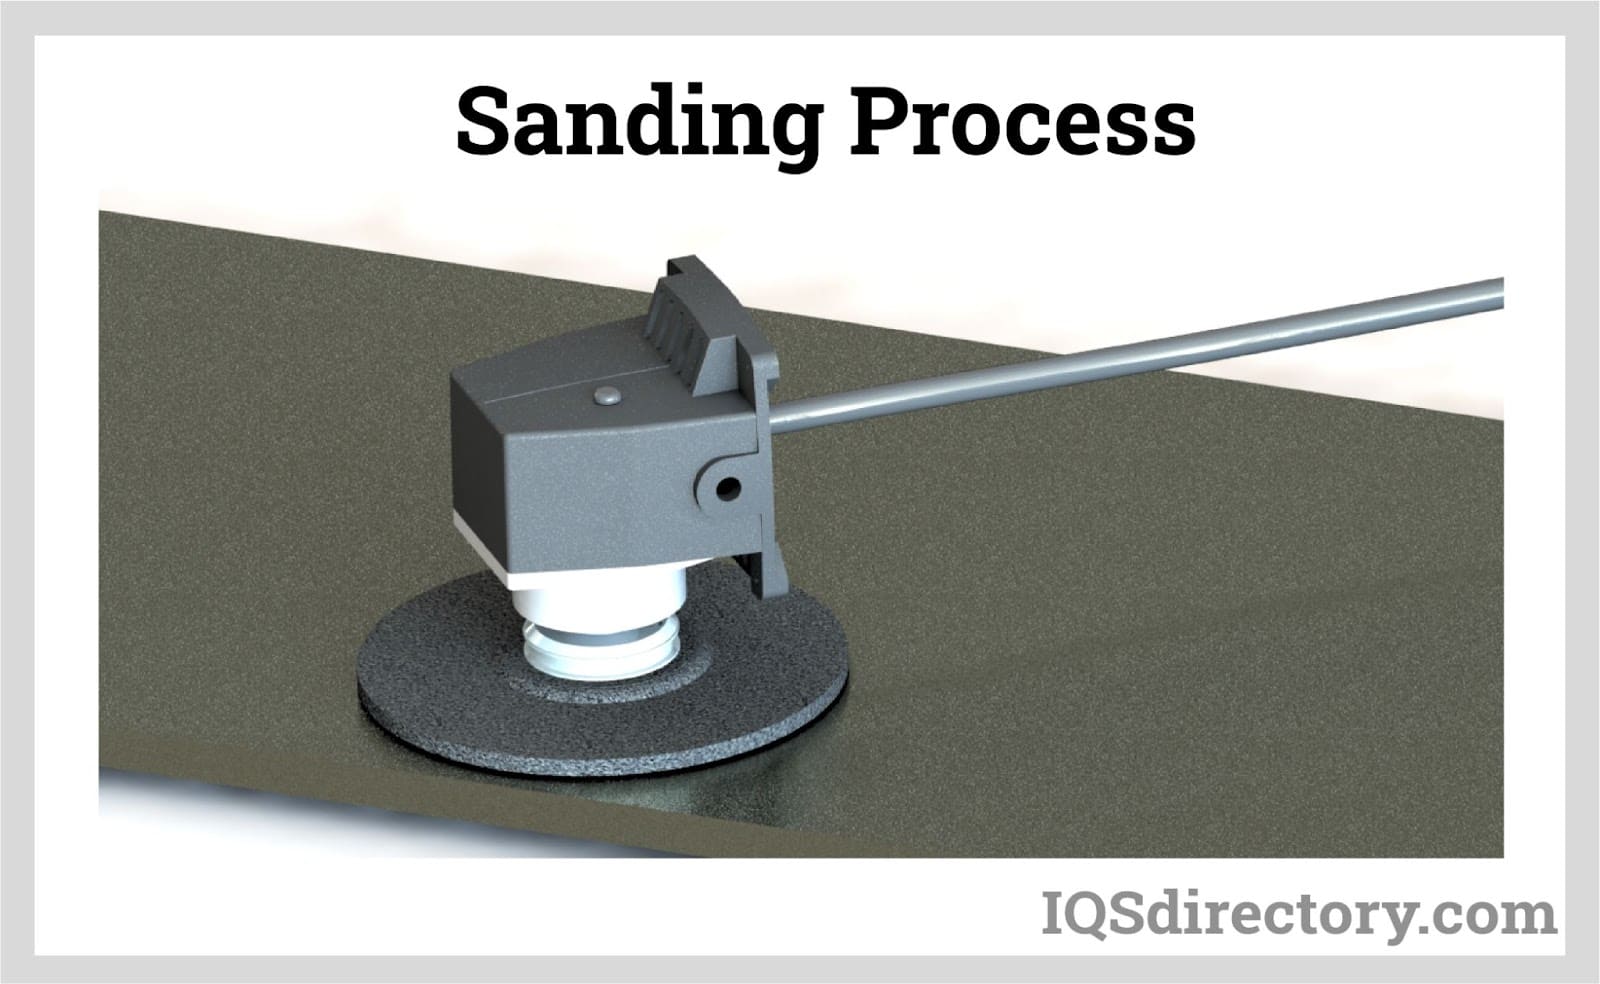 Sanding Process